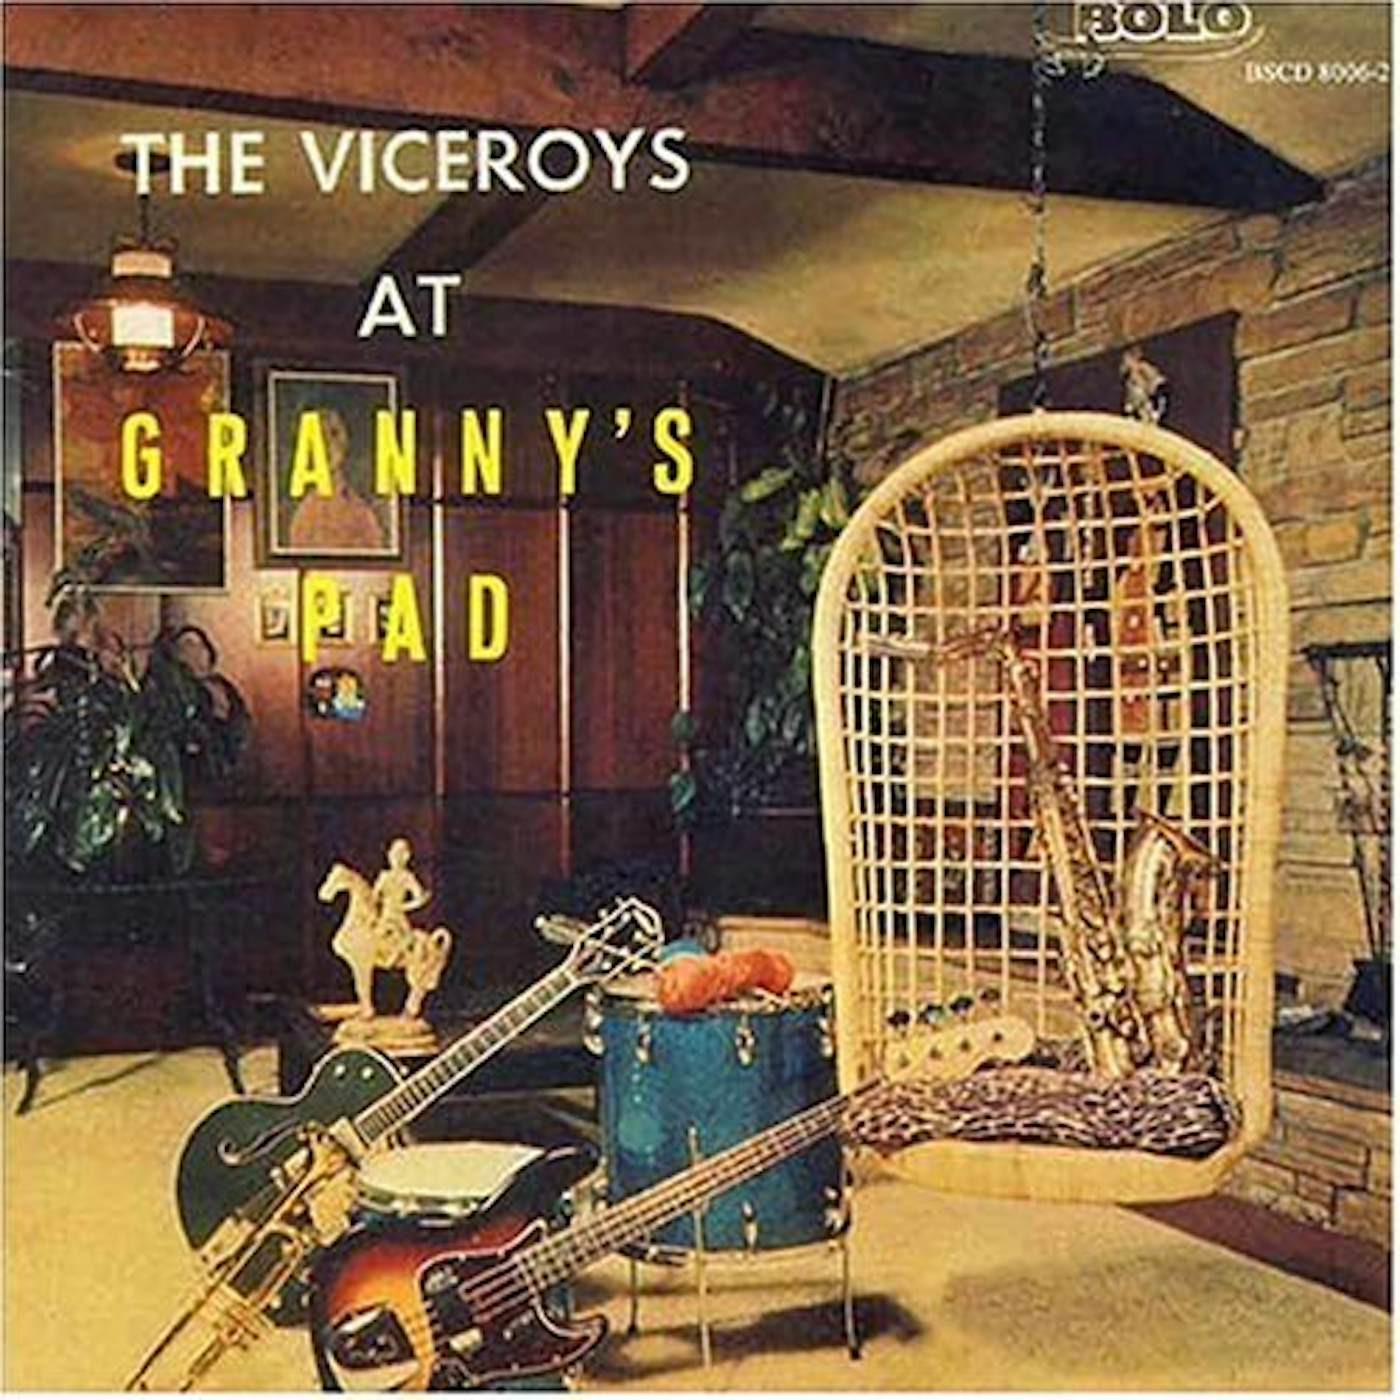 The Viceroys AT GRANNY'S PAD CD